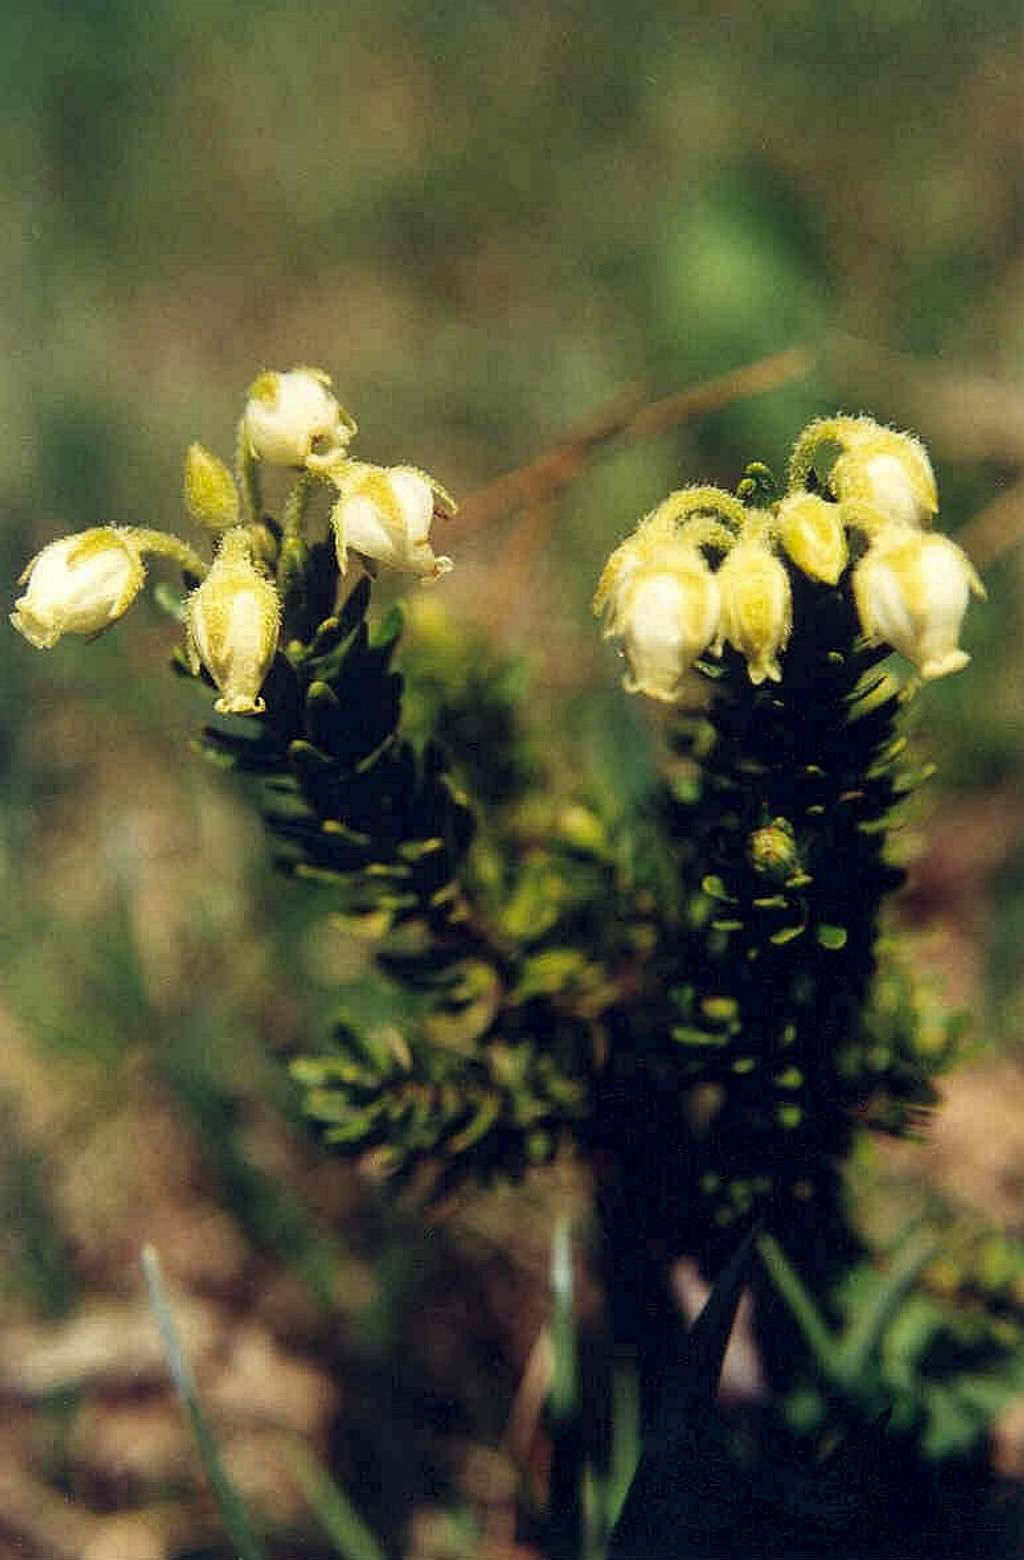 Yellow Mountain Heather (Phyllodoce glanduliflora)